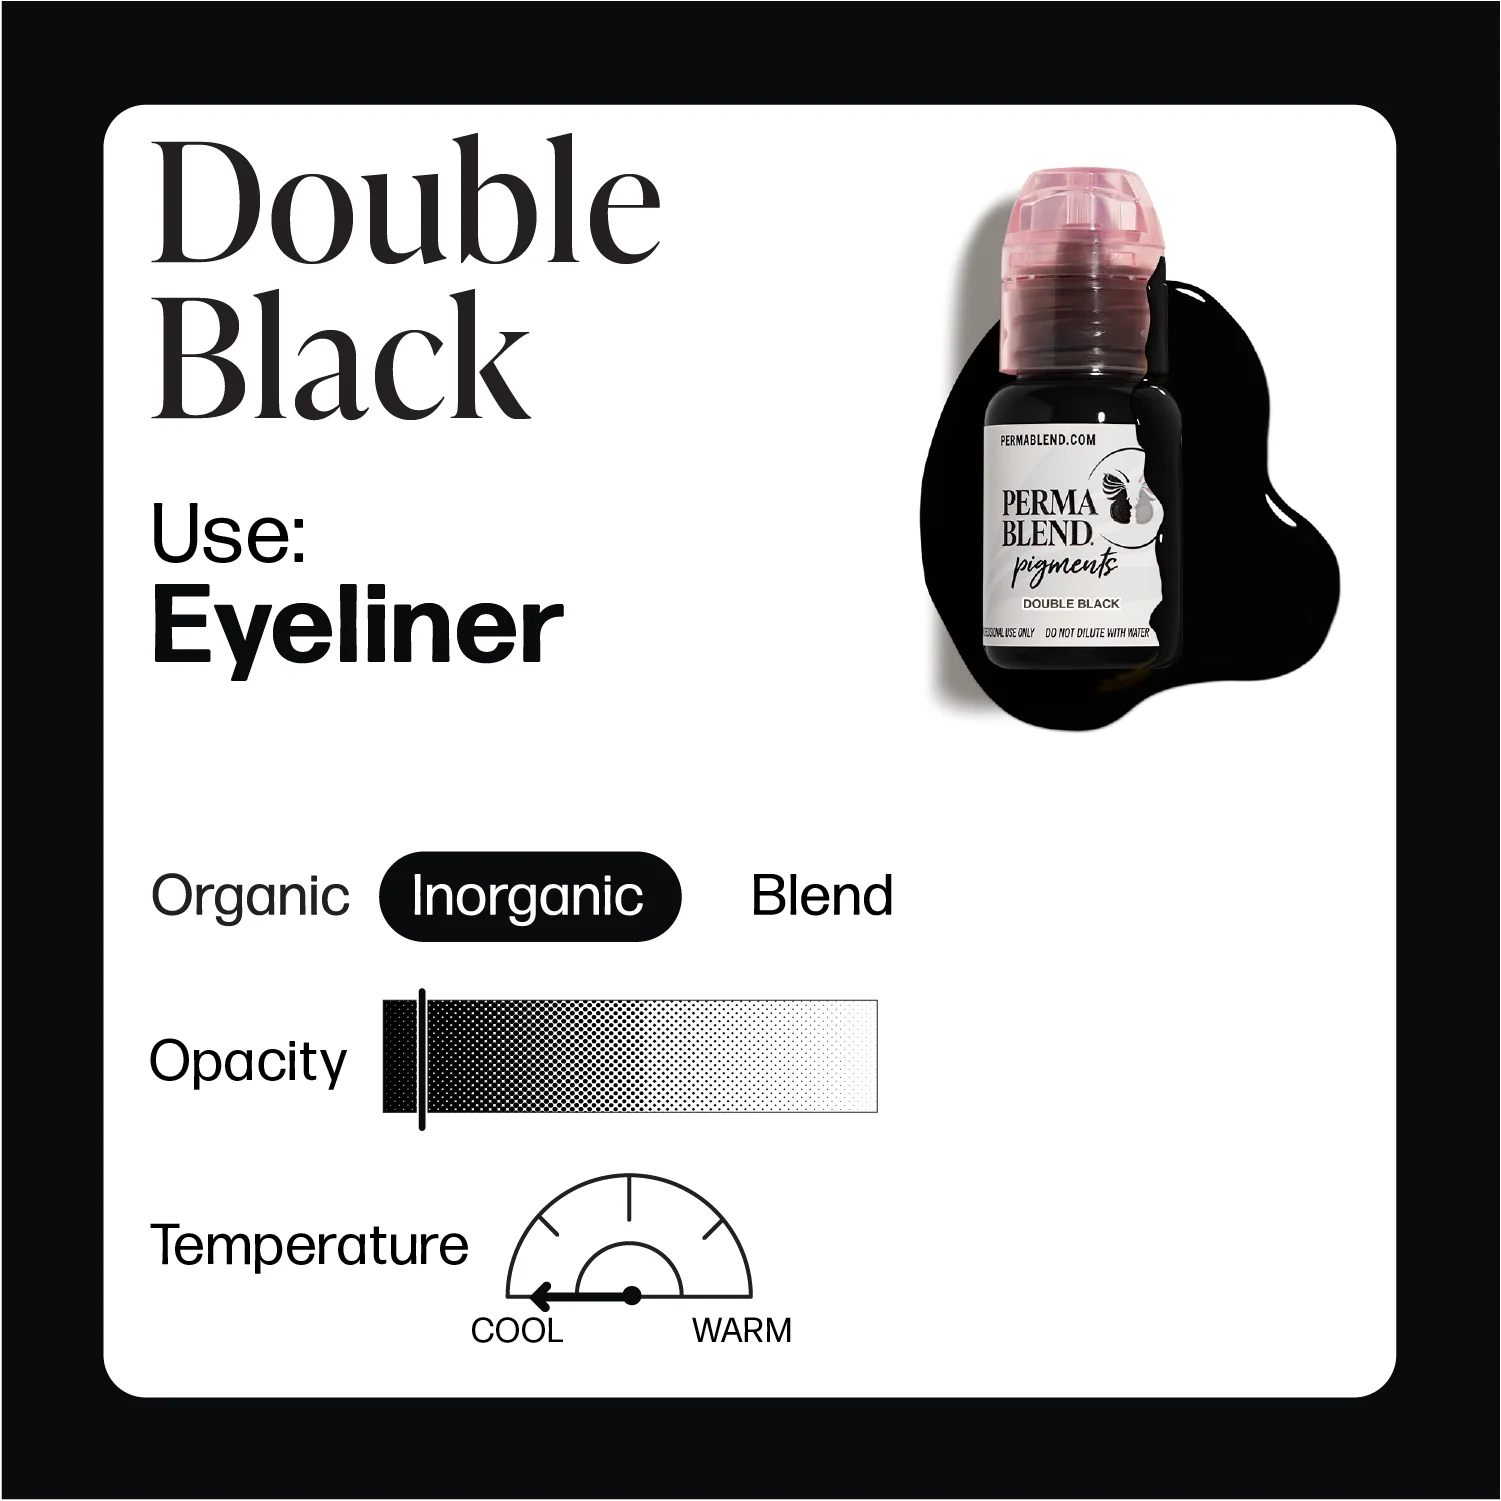 Perma Blend - Double Black